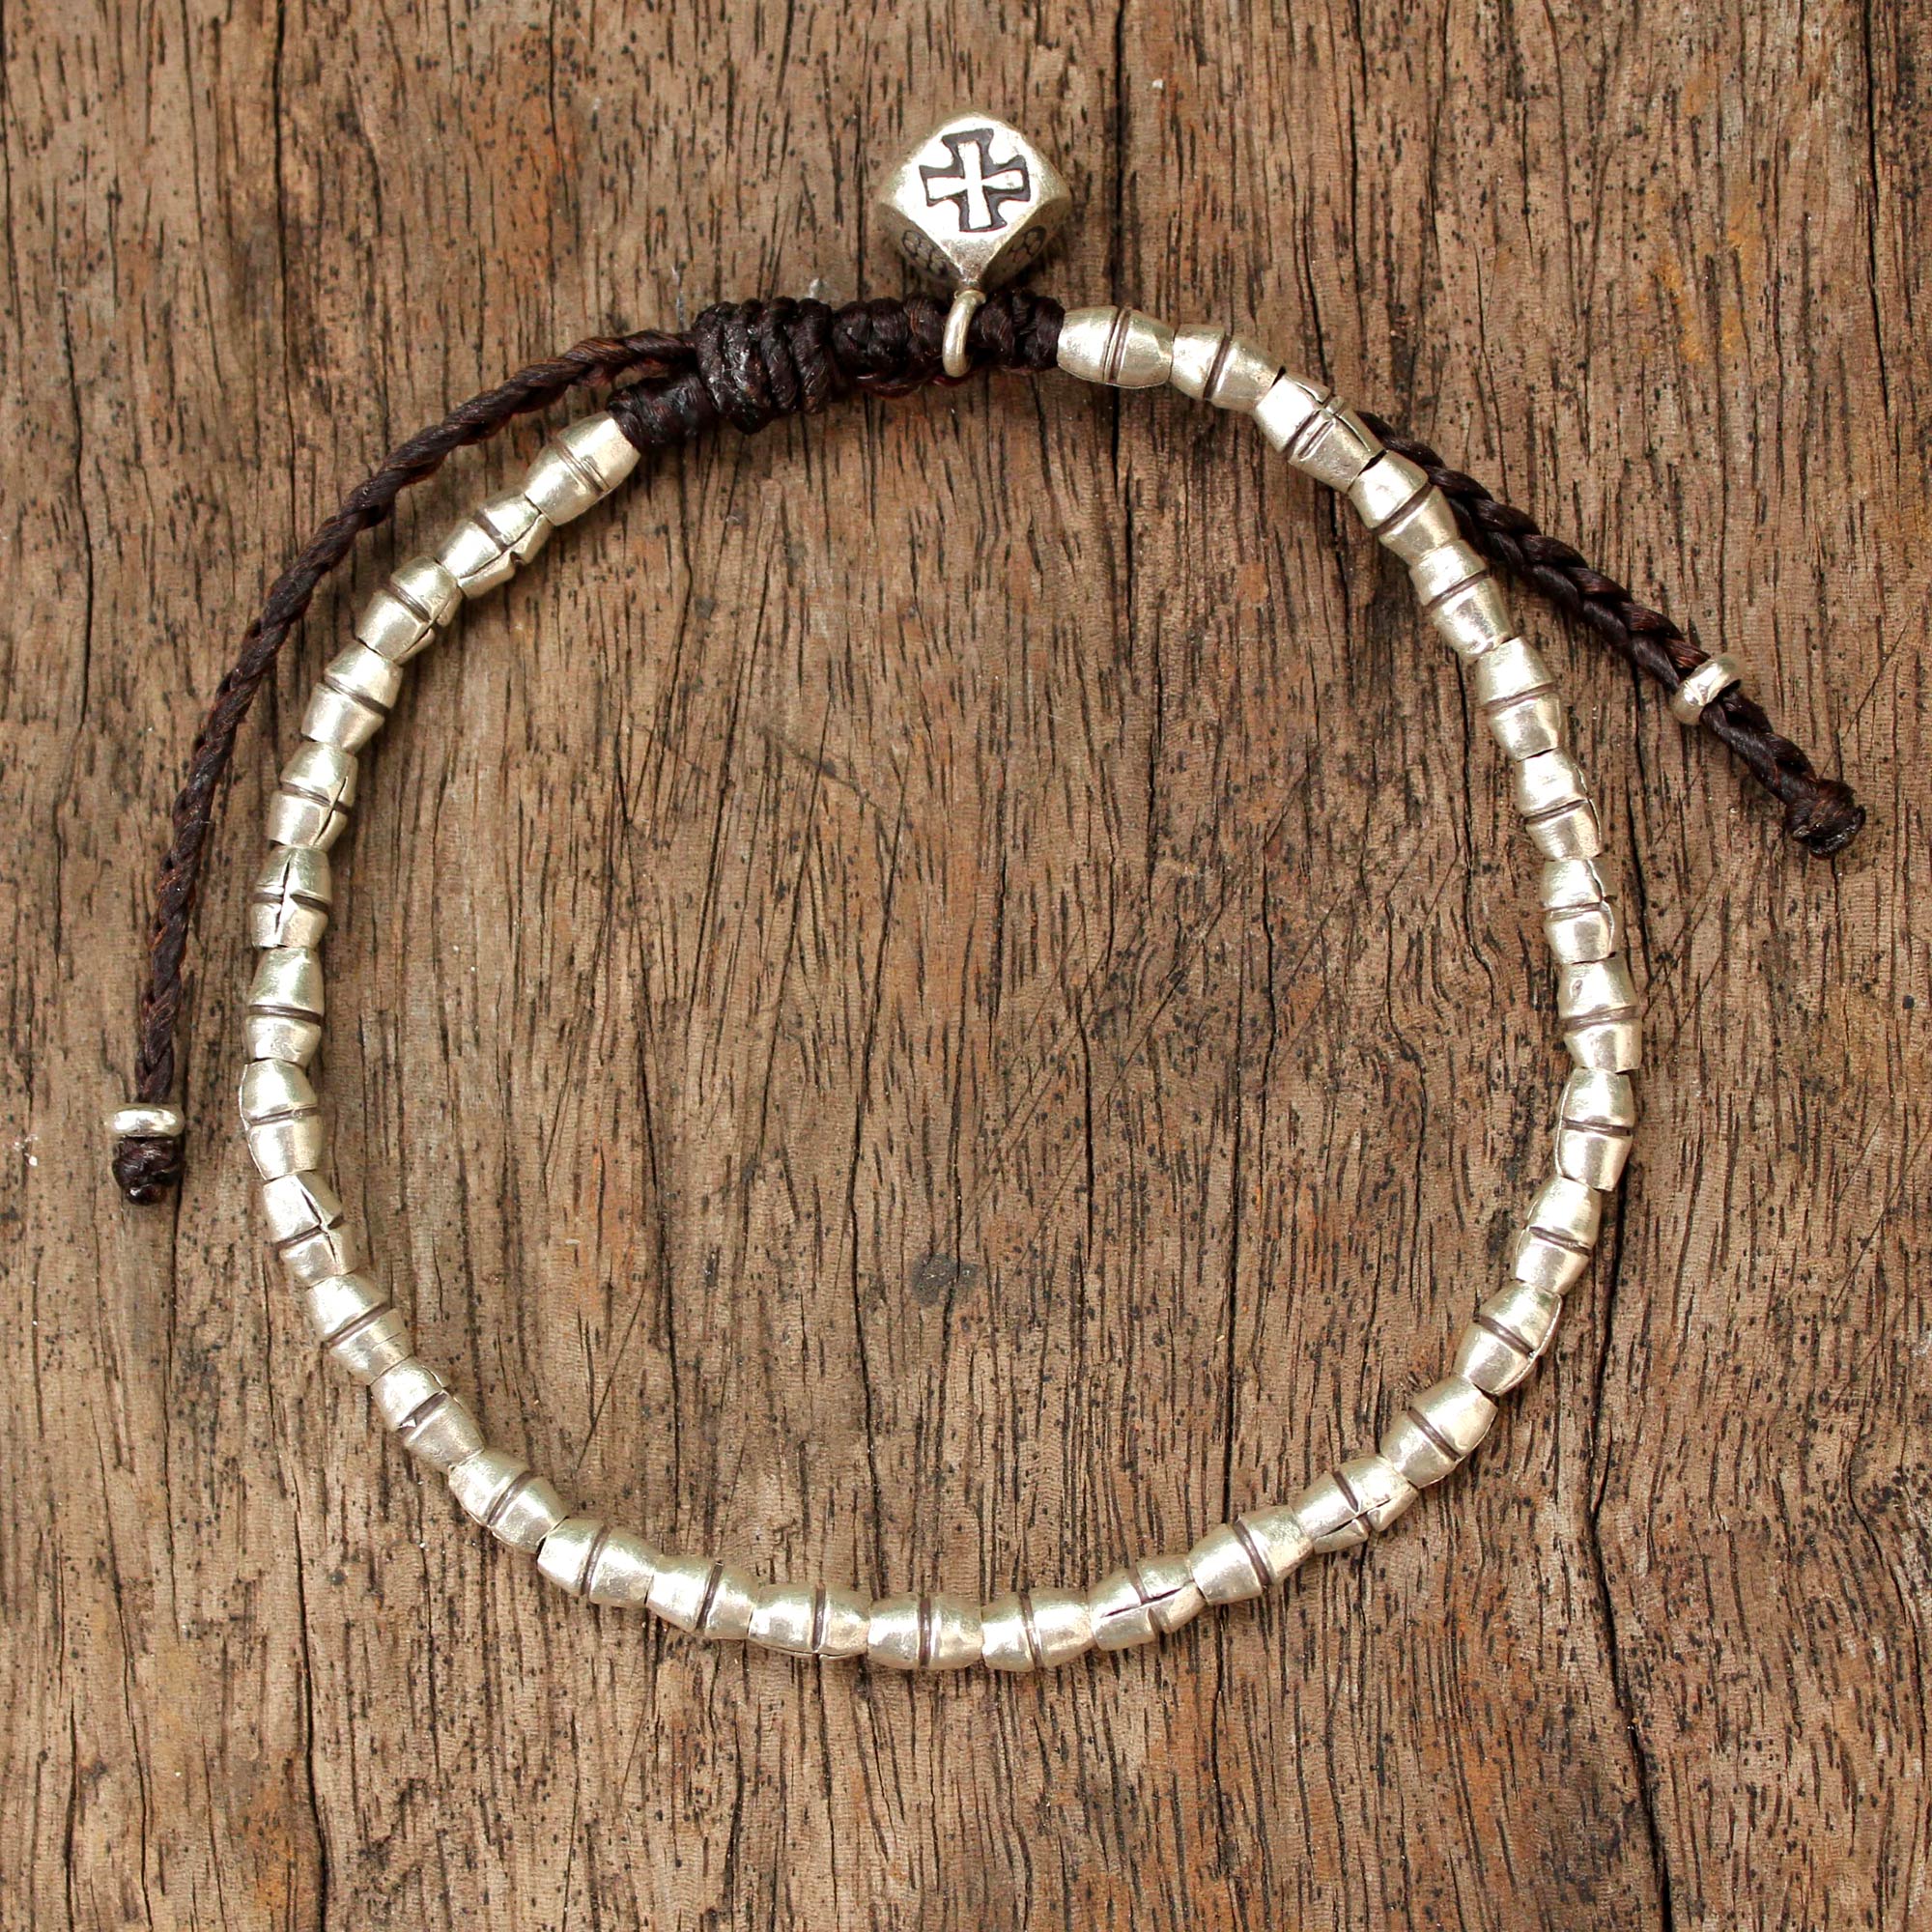 Handmade silver bracelet, 'Hill Tribe Cross' sterling Thailand